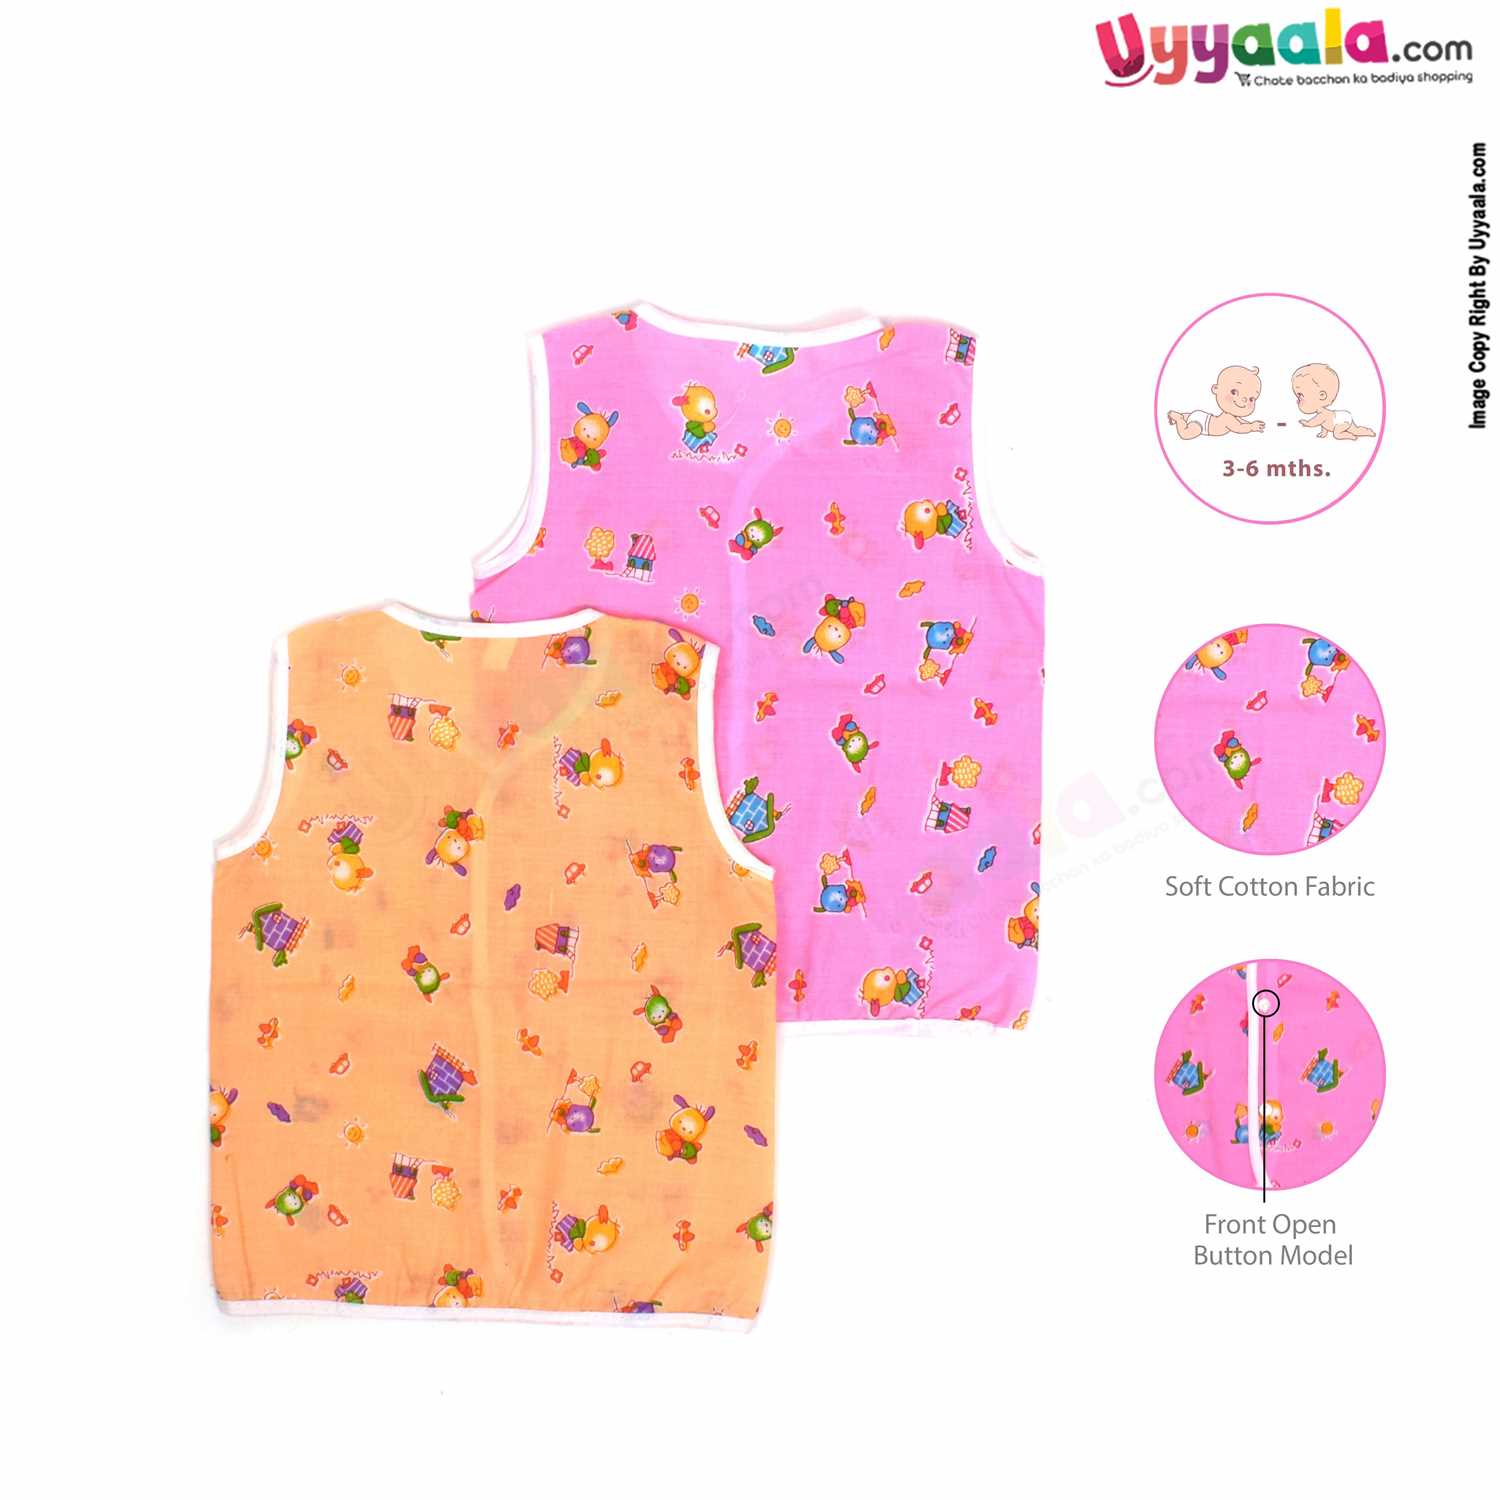 SNUG UP Sleeveless Baby Jabla Set, Front Opening Button Model, Premium Quality Cotton Baby Wear, Bear Print, (3-6M), 2Pack - Pink & Orange